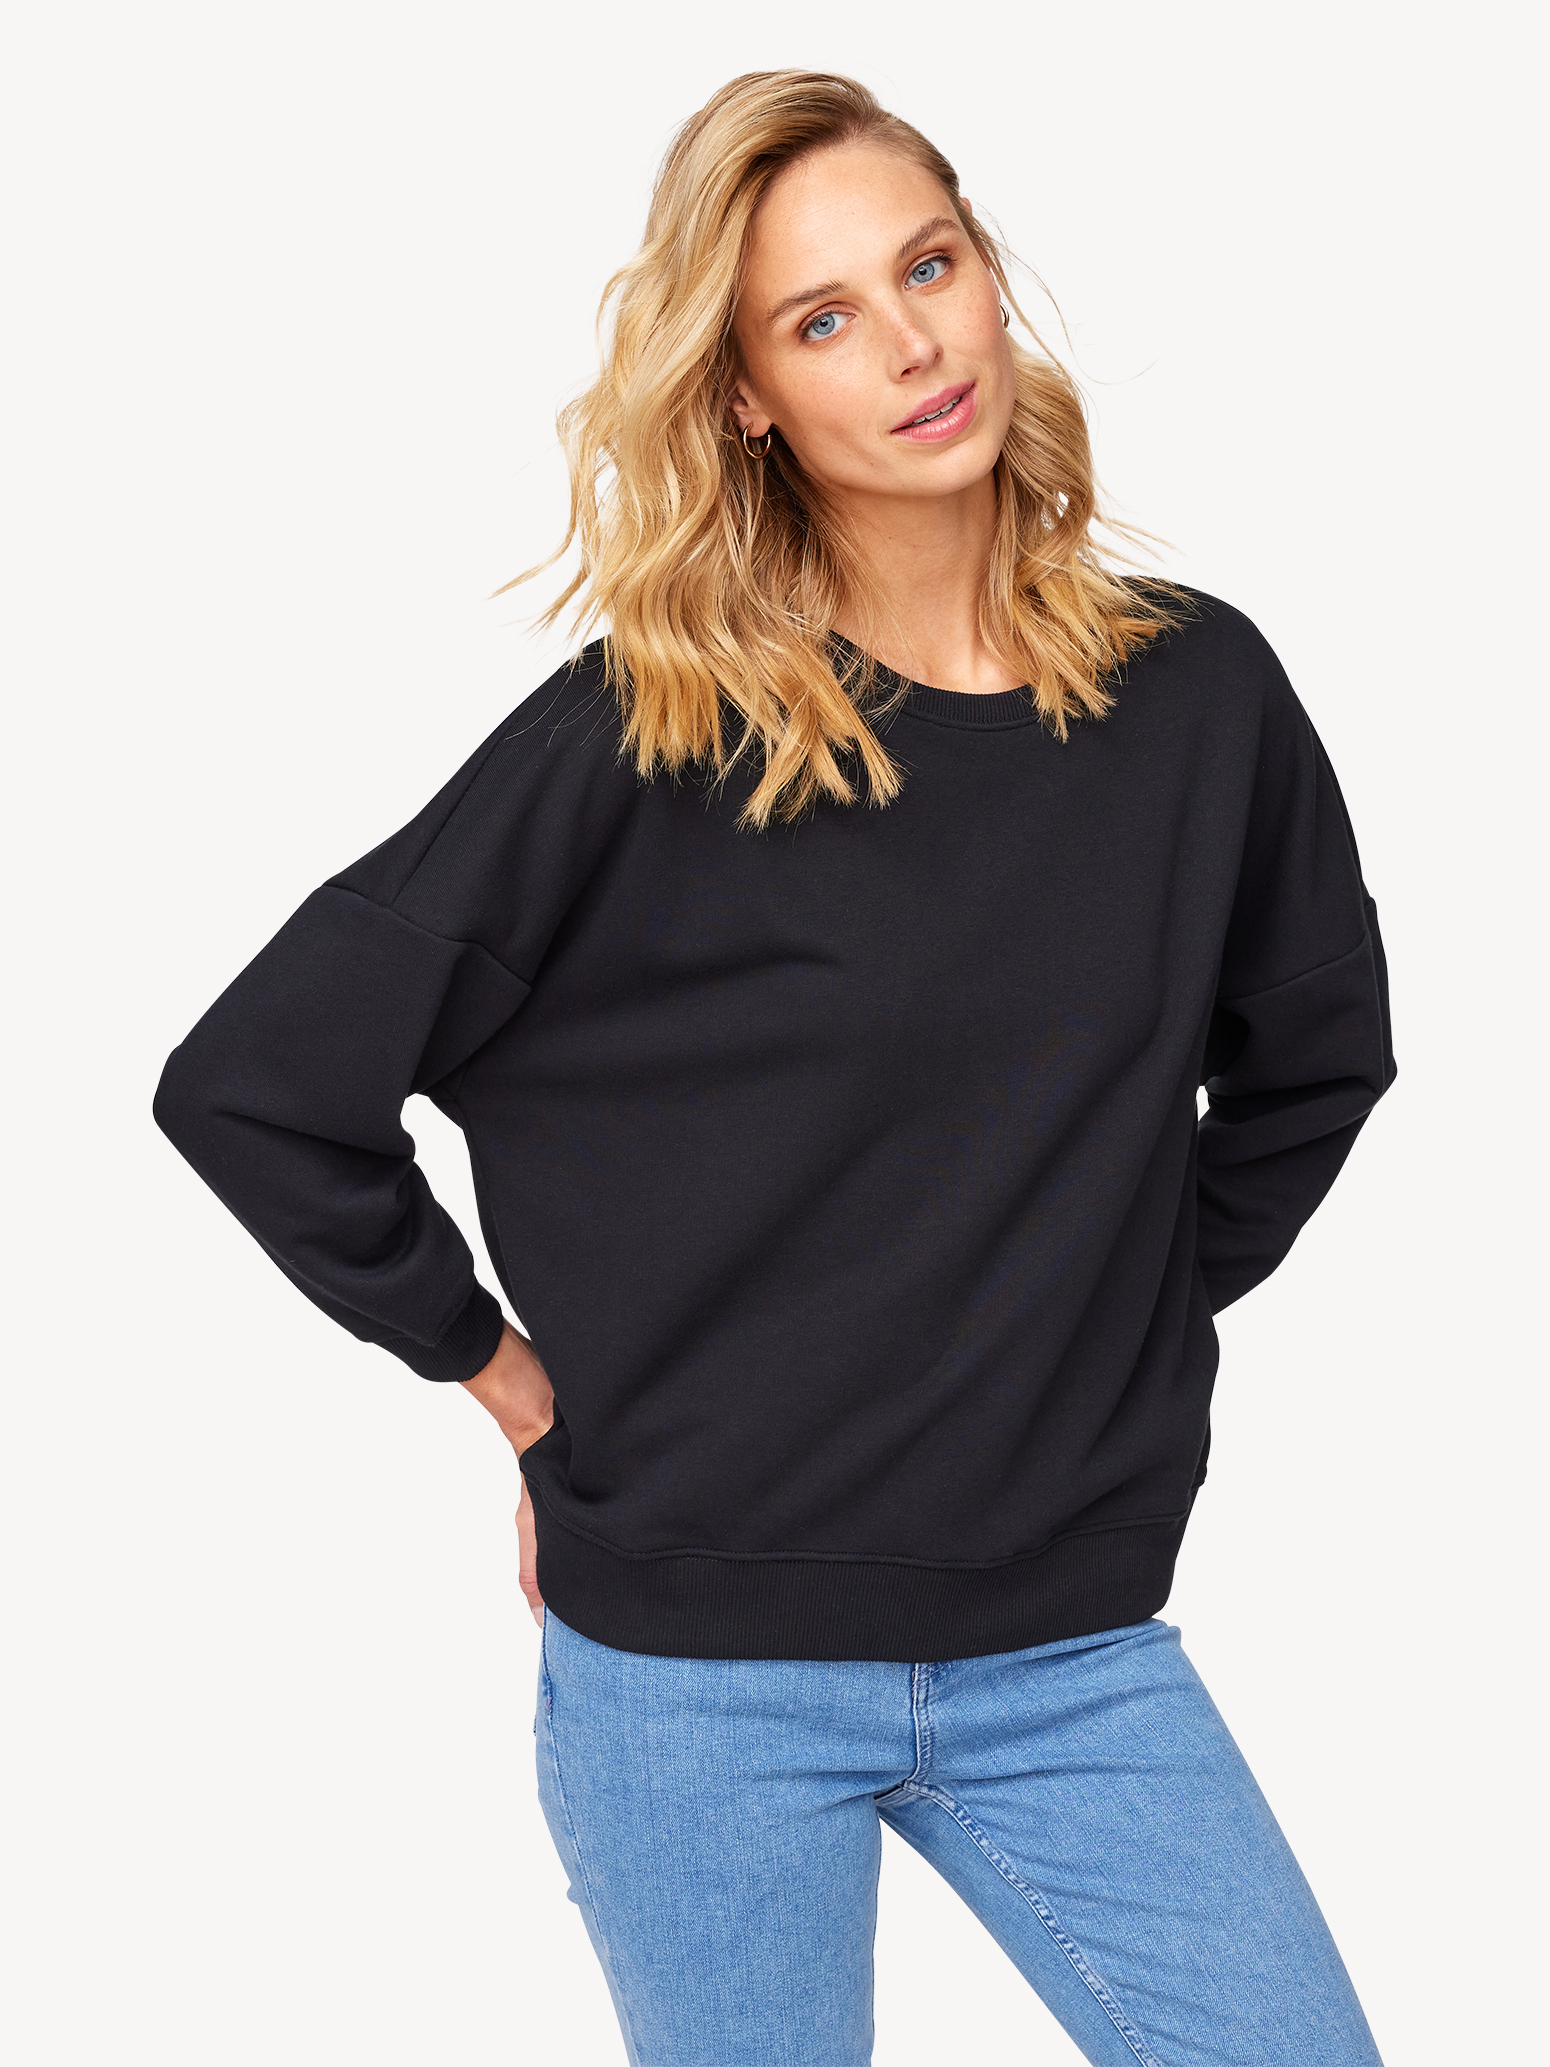 Sweater - zwart, Black Beauty, hi-res